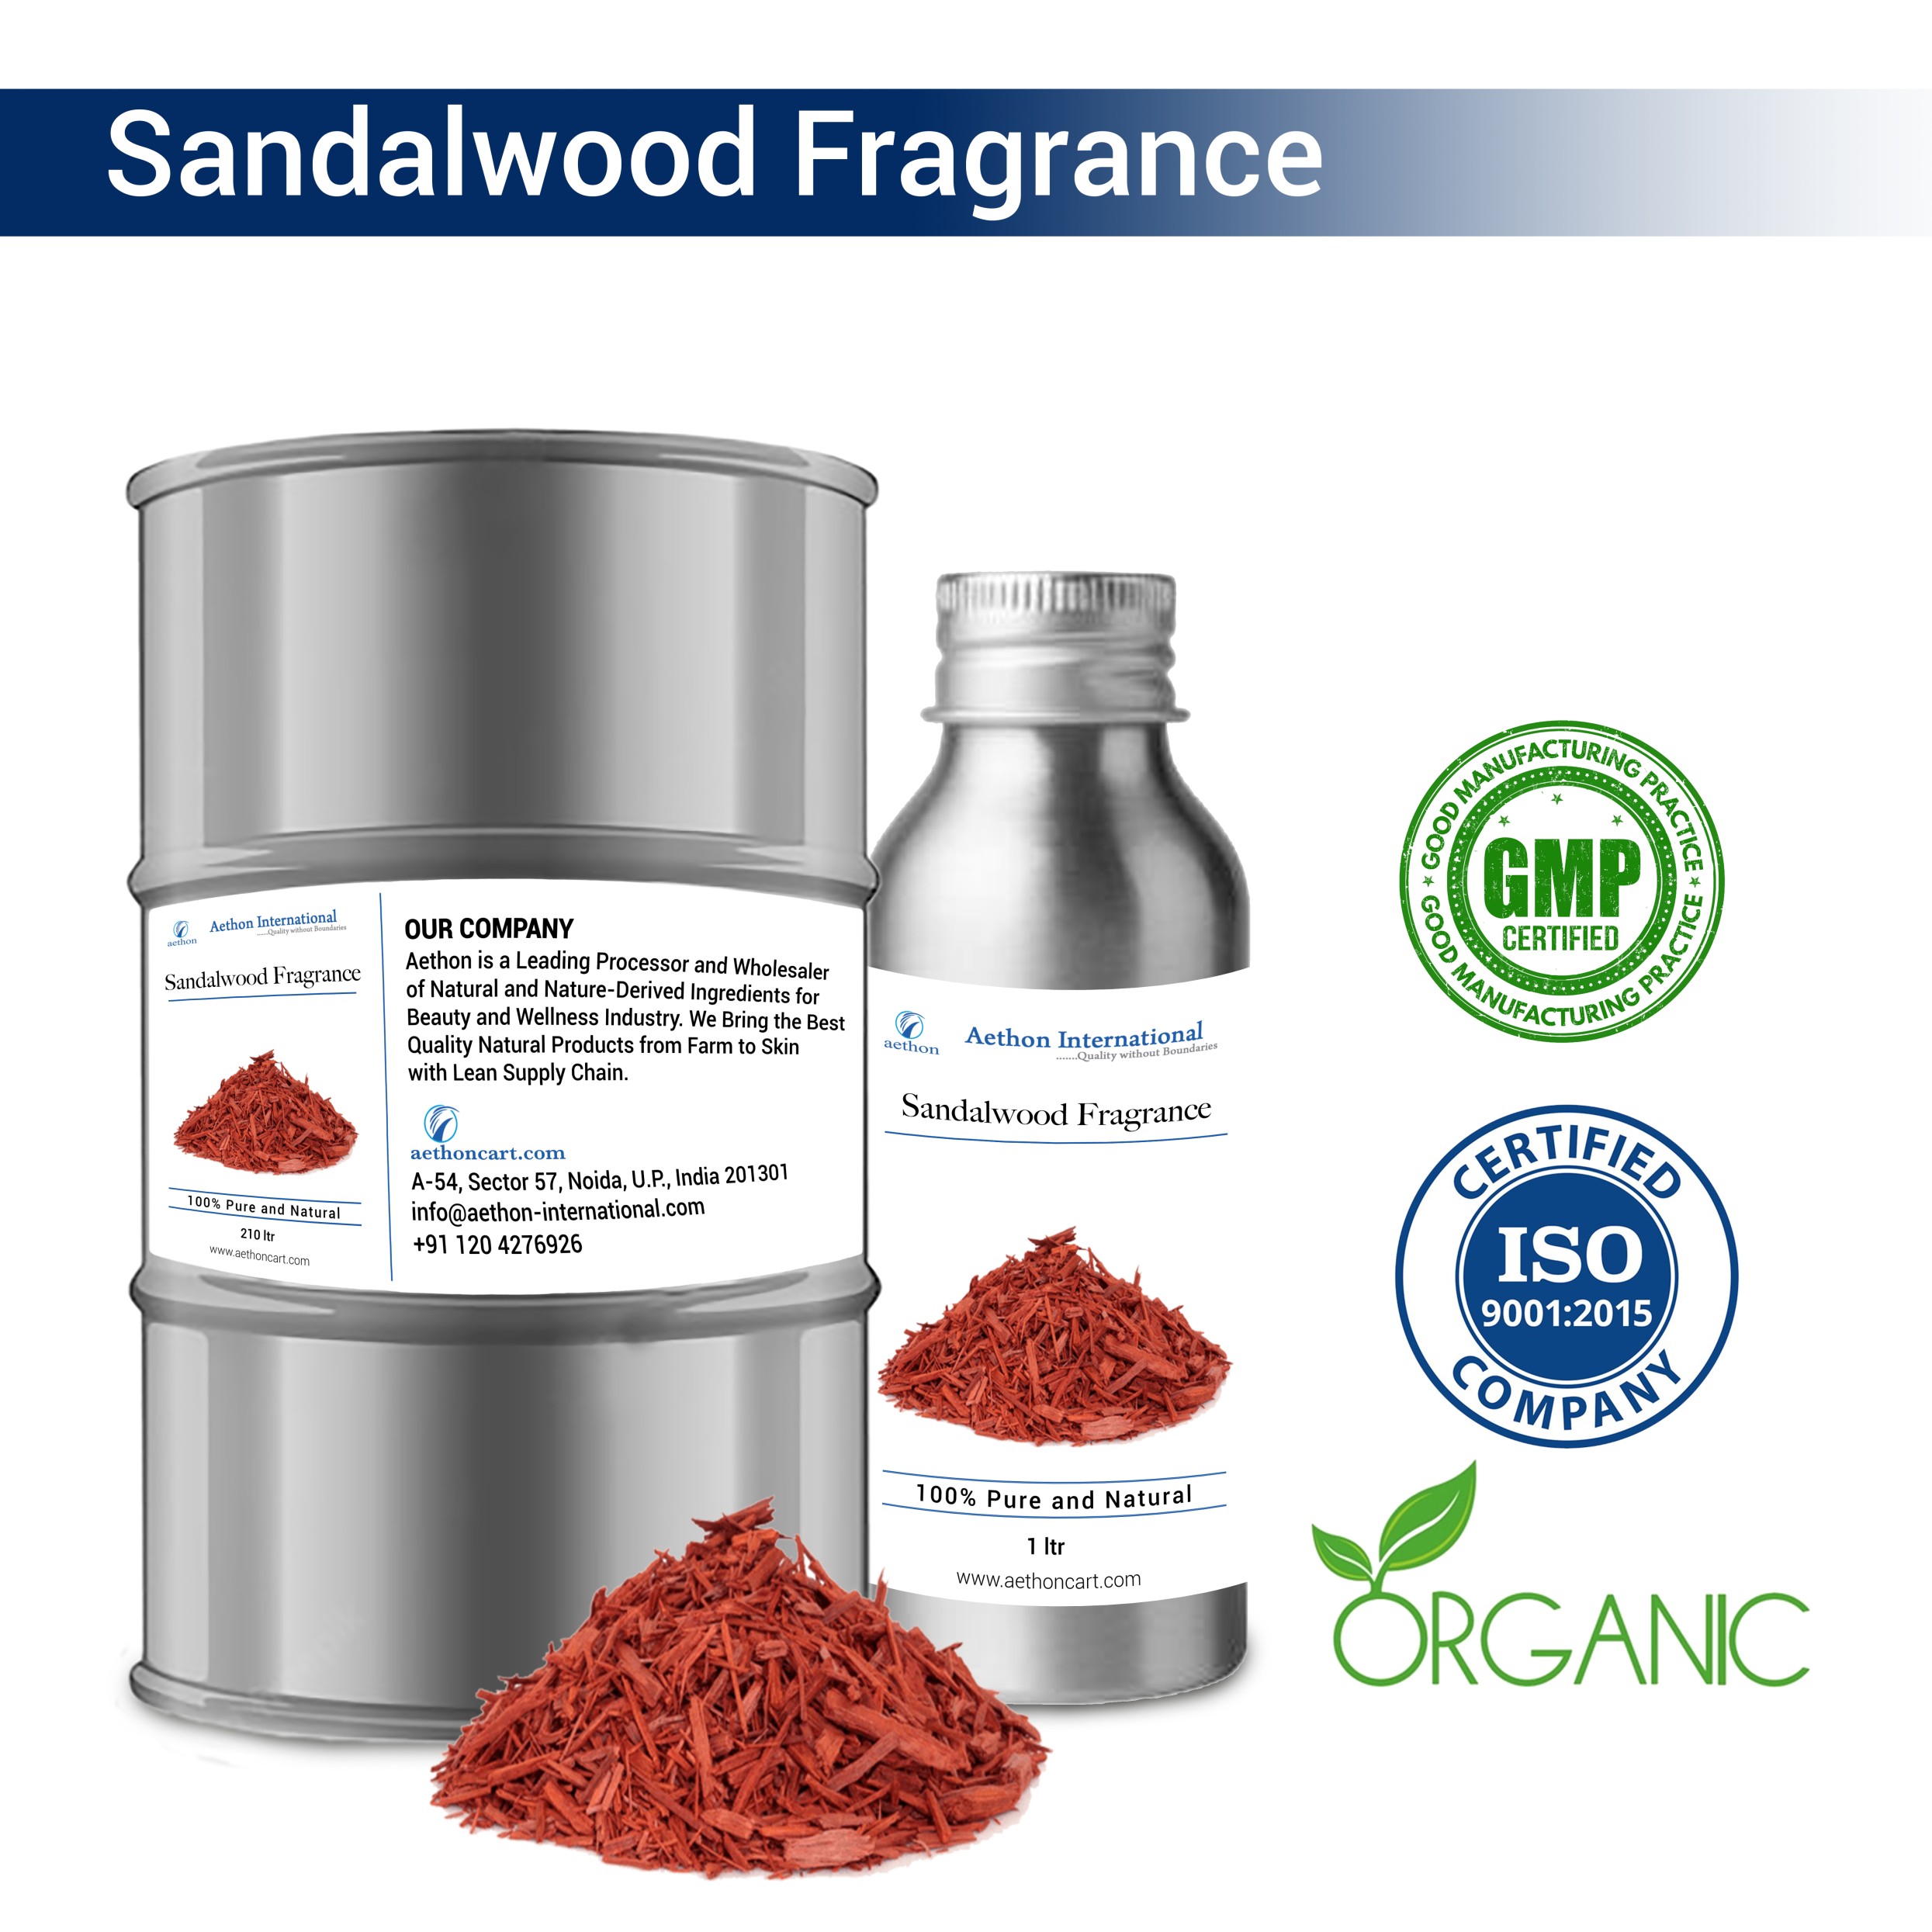 Sandalwood Fragrance